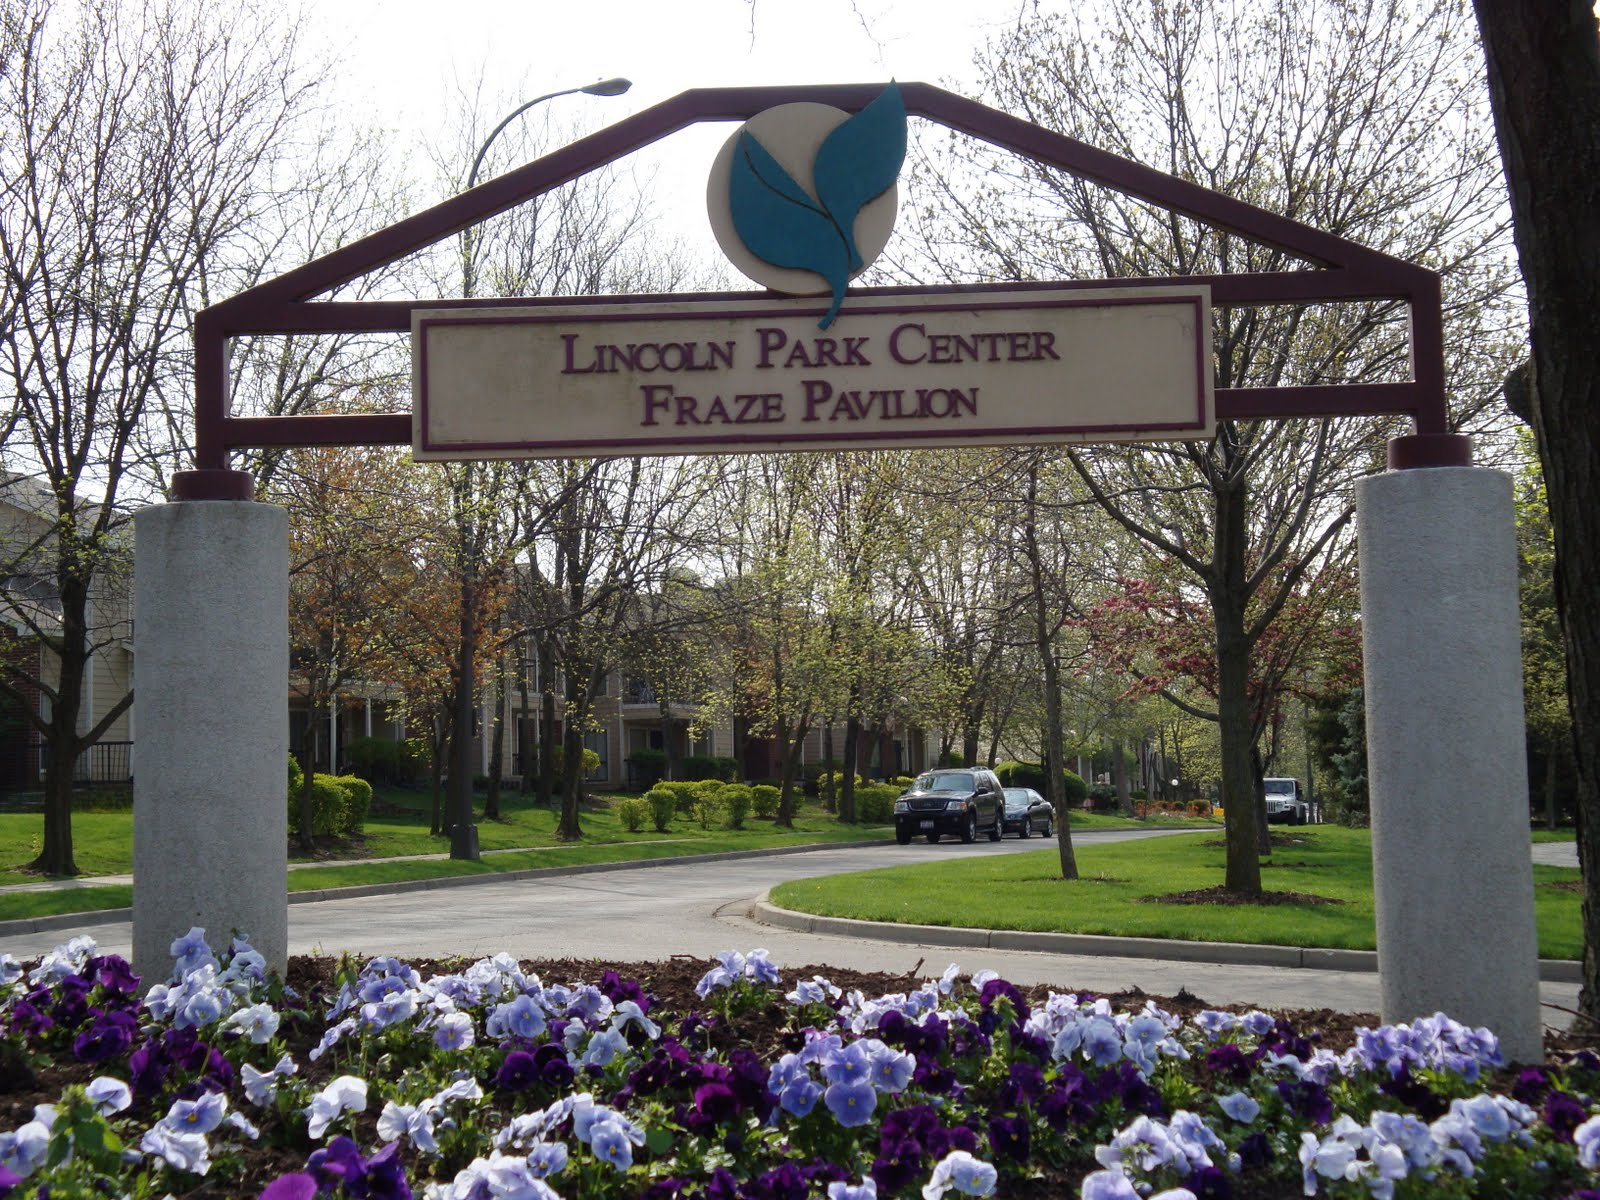 Lincoln Park Commons Pond News Kettering, Ohio: Lincoln Park Center